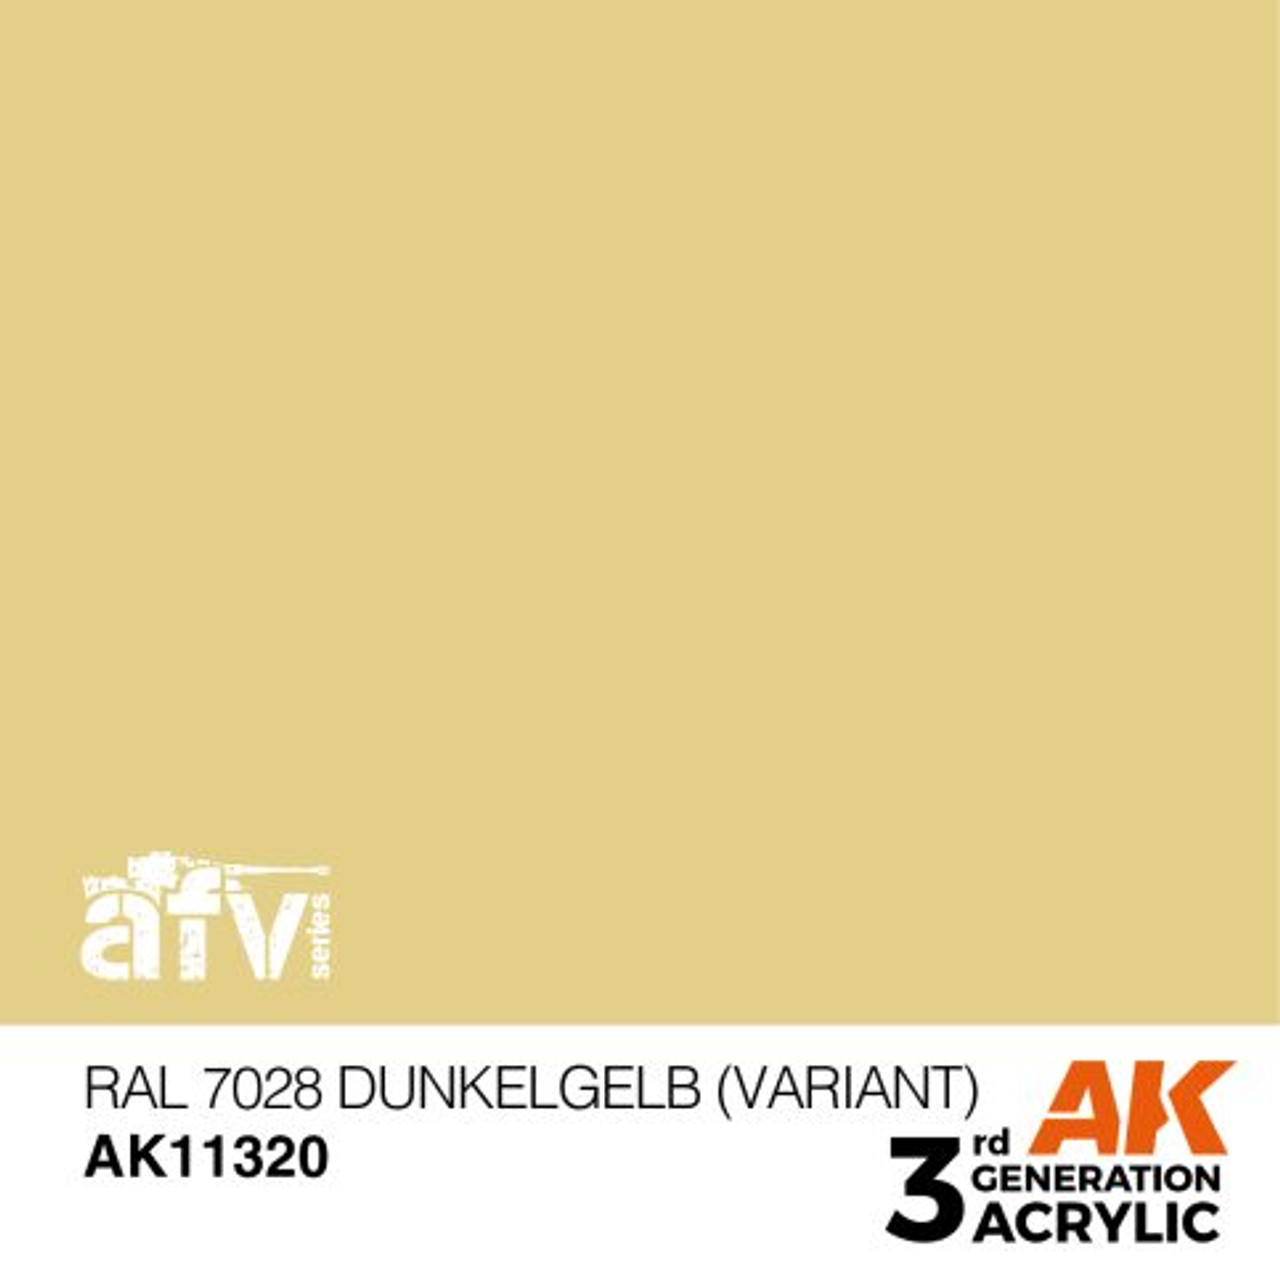 3G AFV 320 - RAL 7028 Dunkelgelb (Variant)